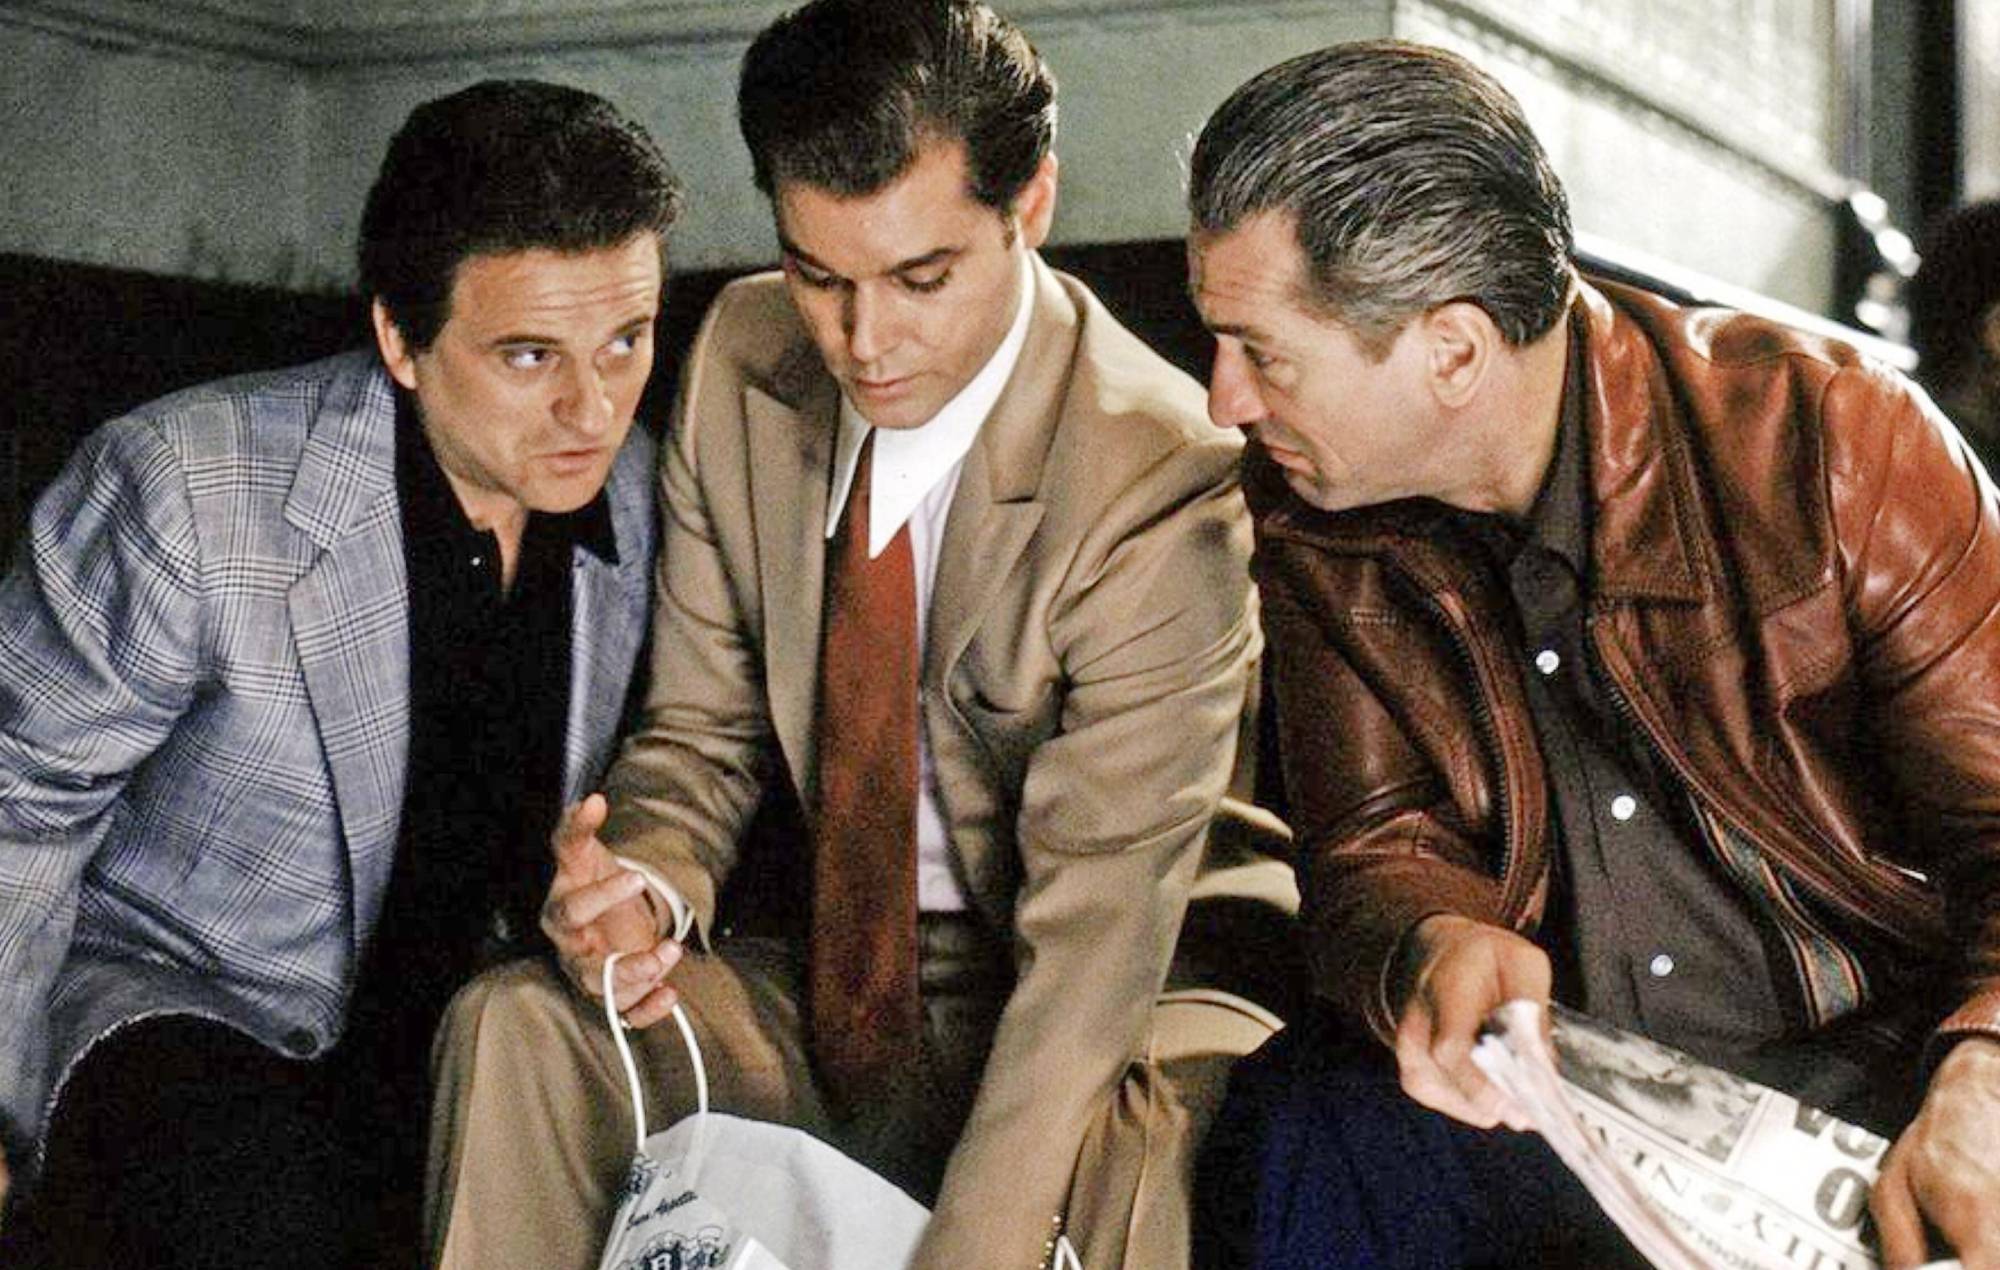 Joe Pesci, Ray Liotta, and Robert De Niro in Goodfellas